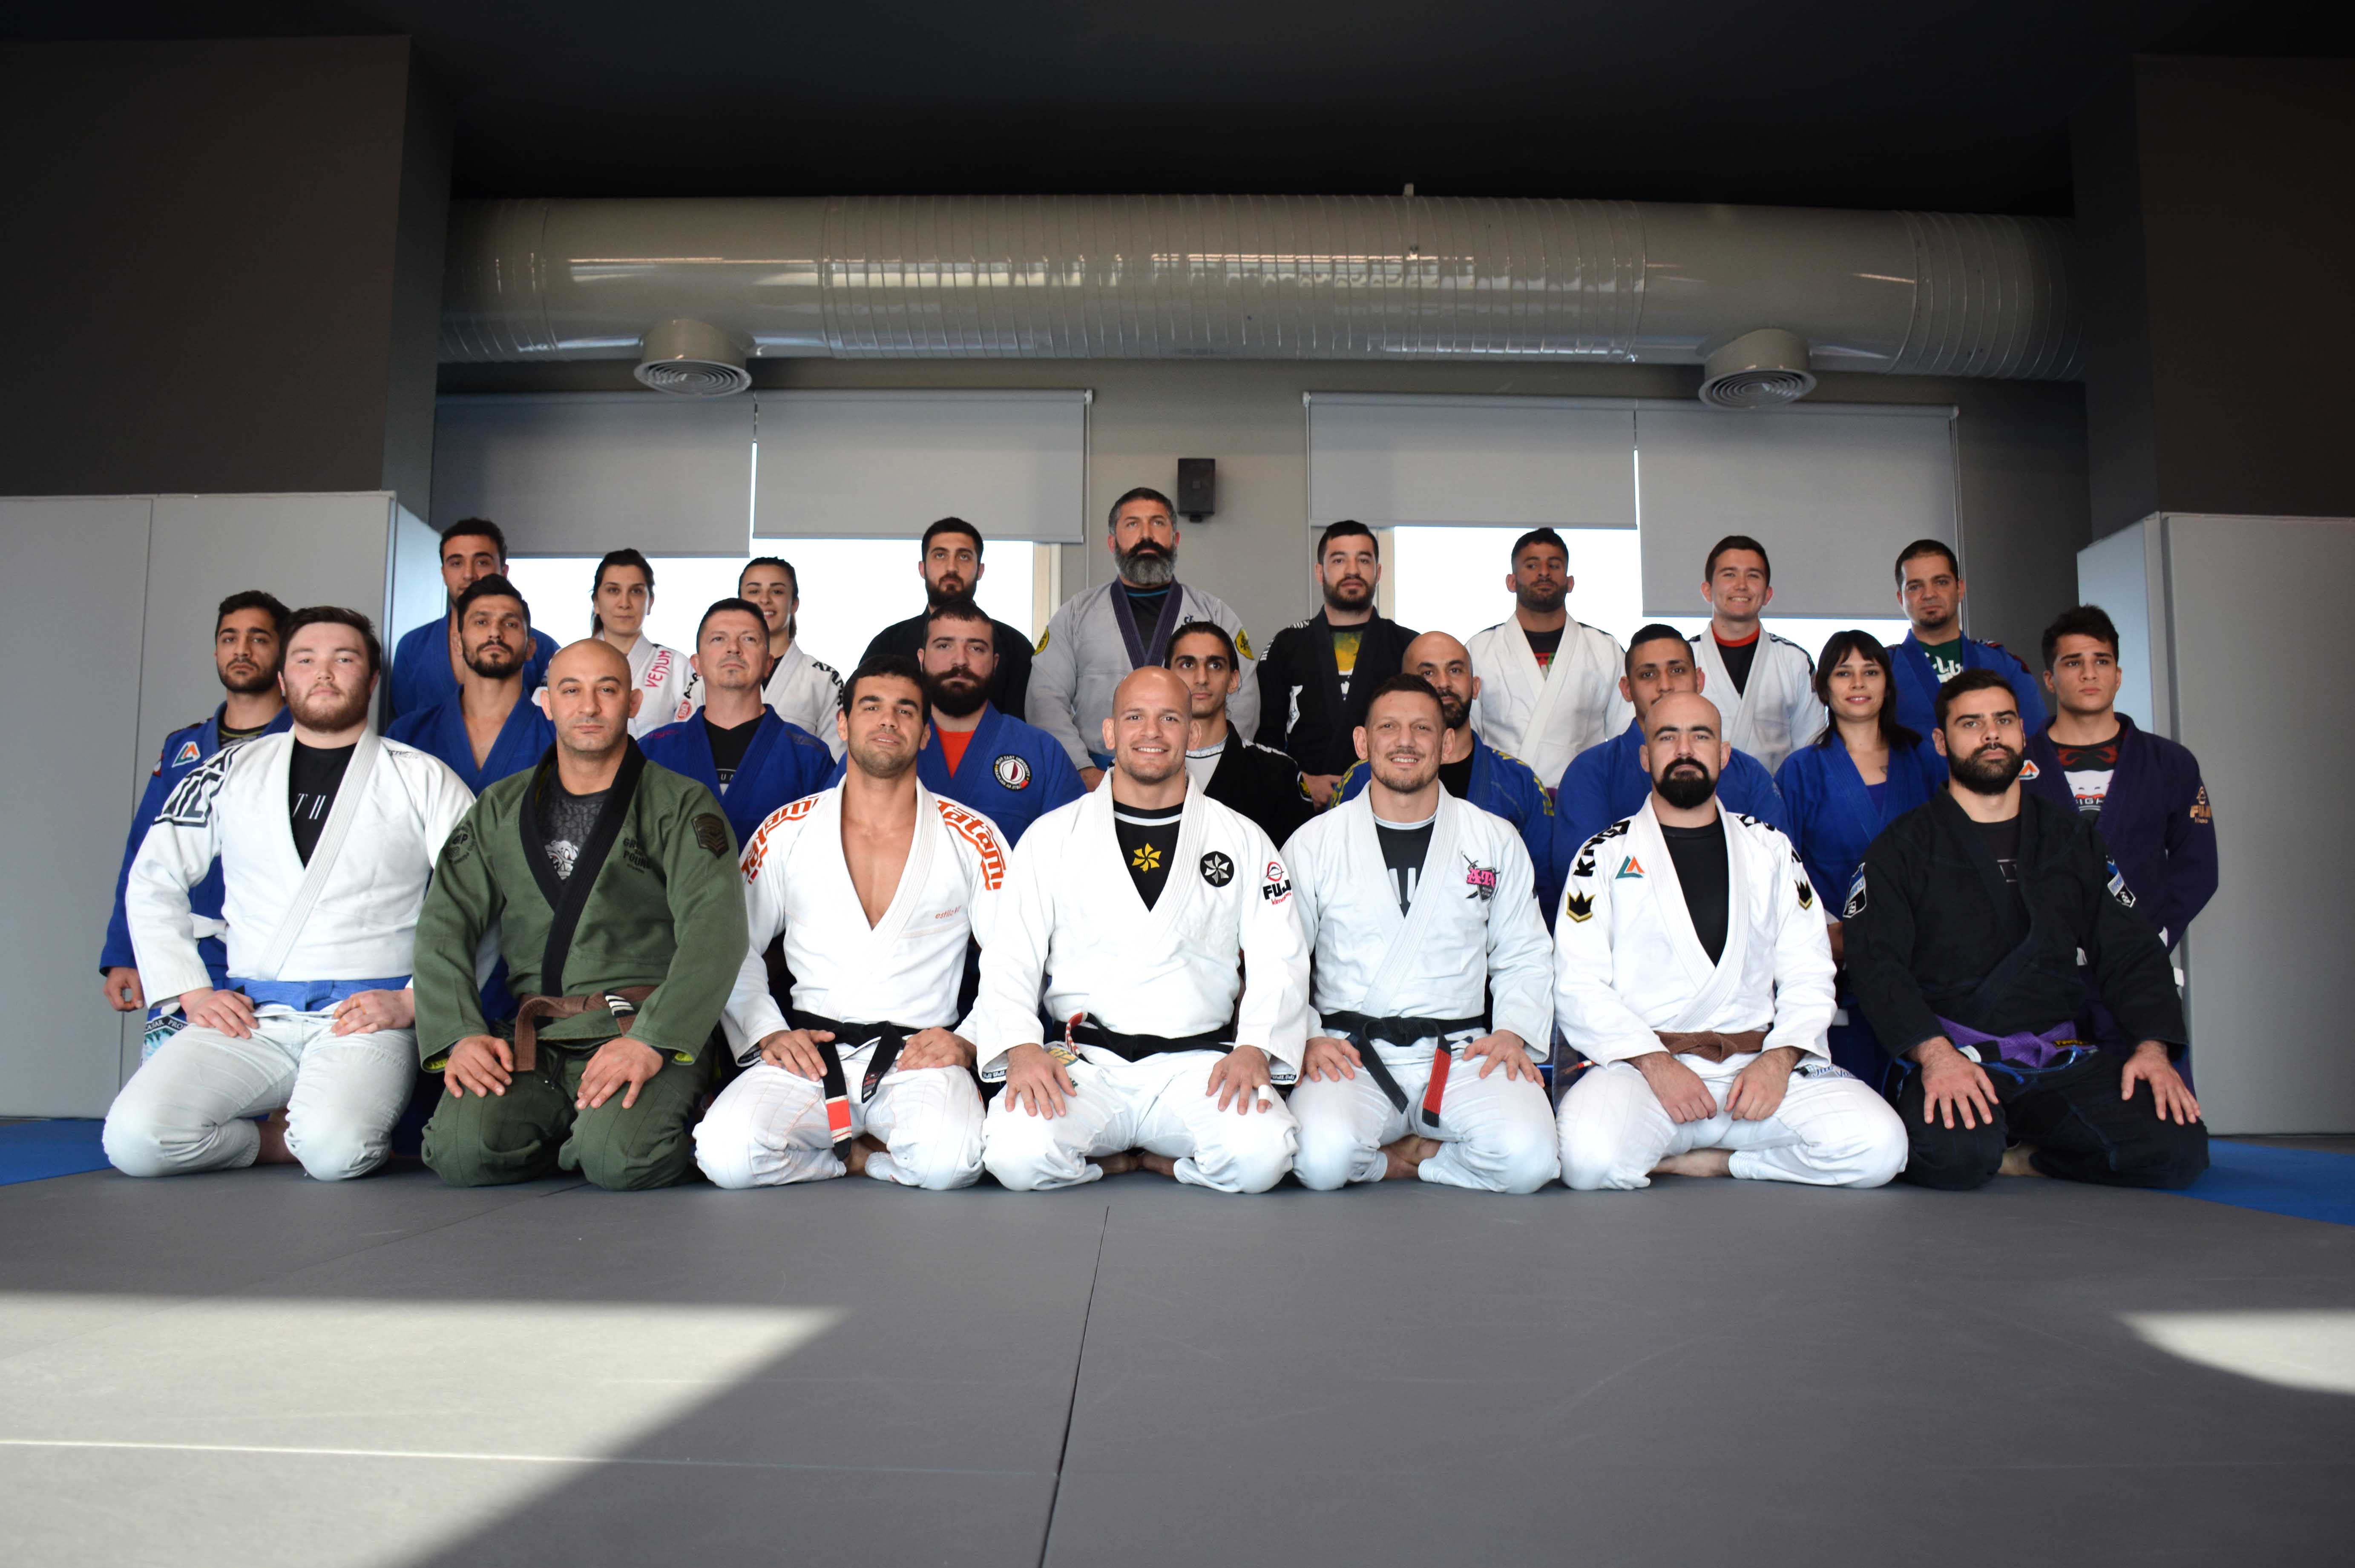 World Famous Jiu Jitsu Champion and Instructor Xande Riberio gave an Applied Jiu Jitsu Seminar at the Near East University